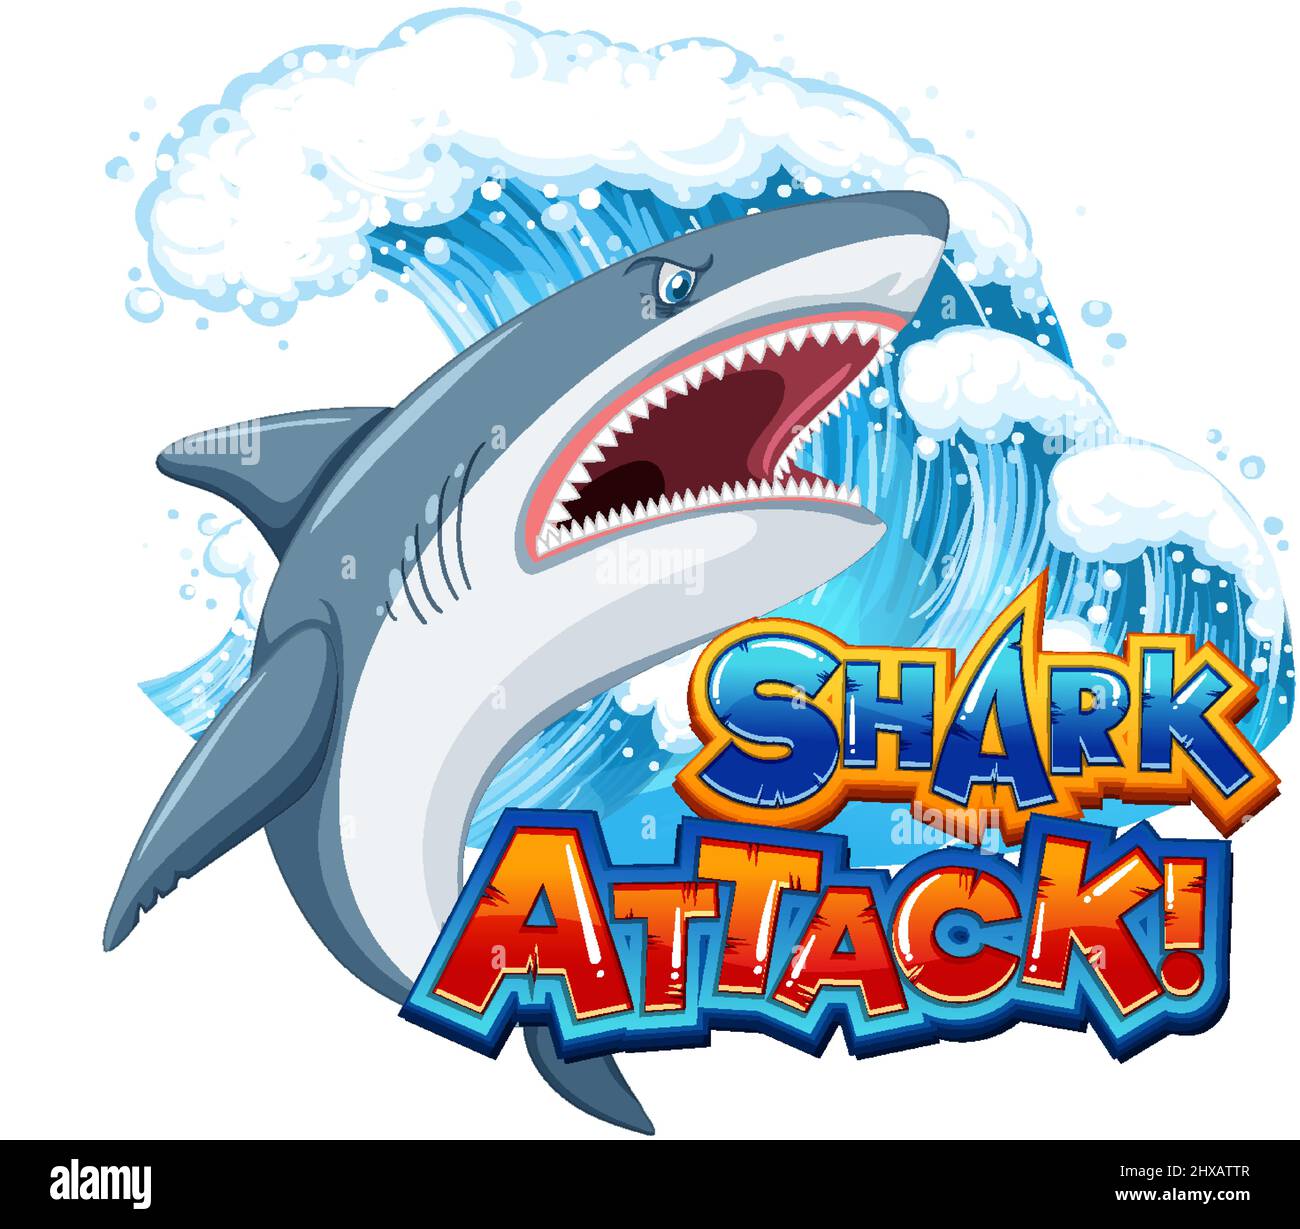 Shark attack font logo with cartoon aggressive shark illustration Stock  Vector Image & Art - Alamy